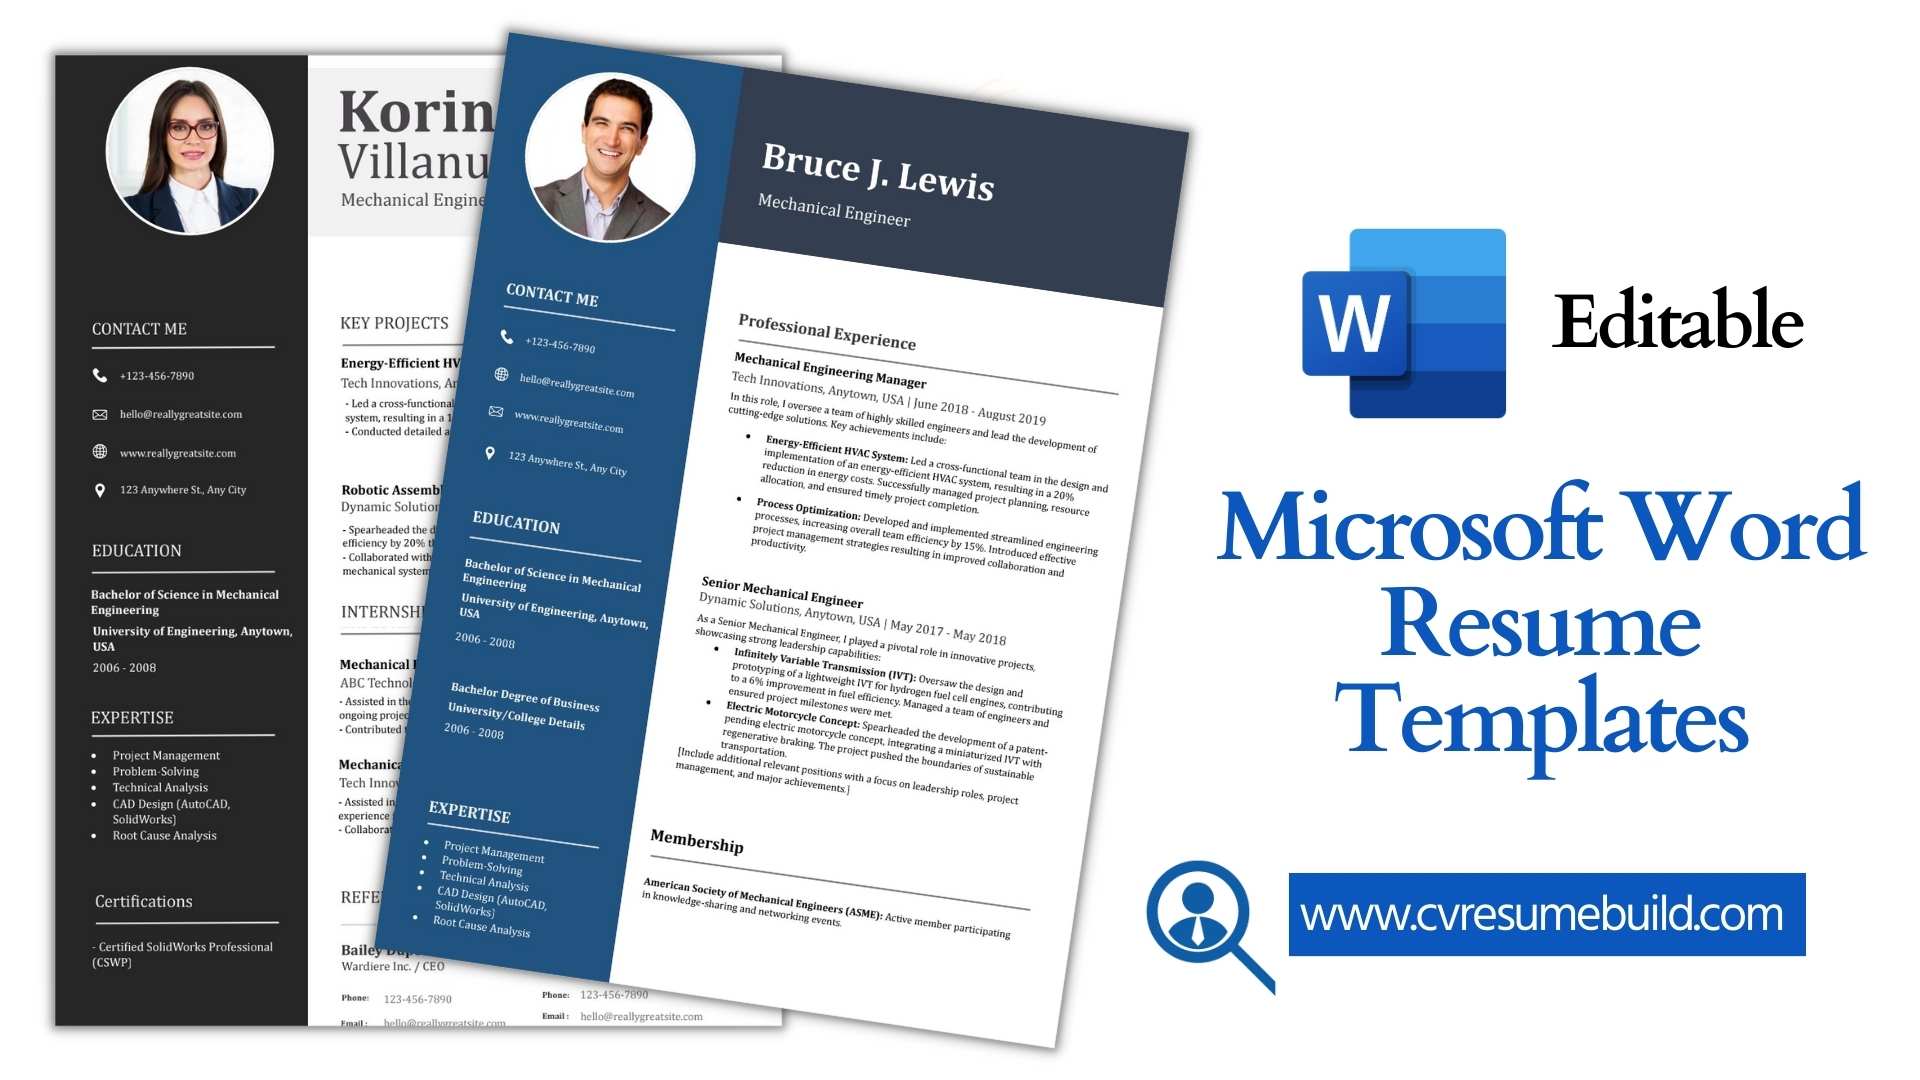 Microsoft Word Resume Templates